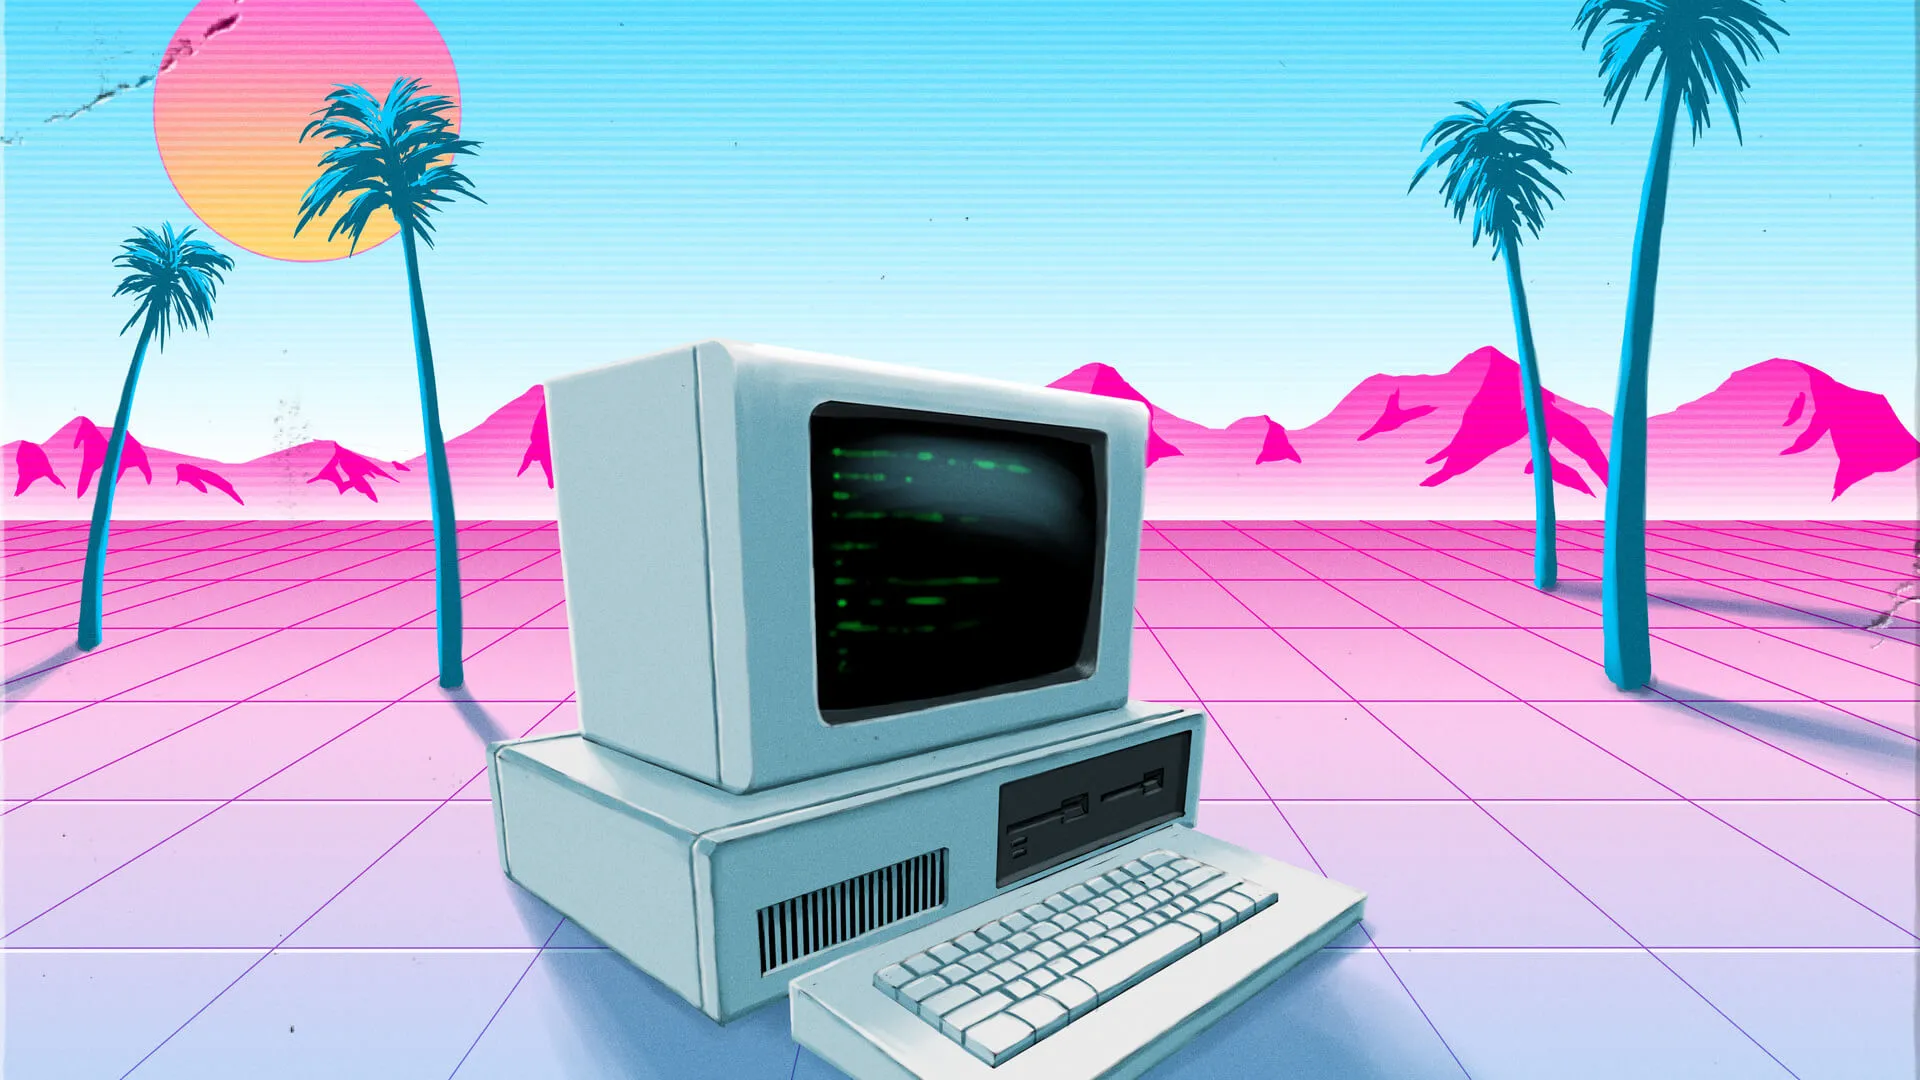 Aesthetic 80s computer